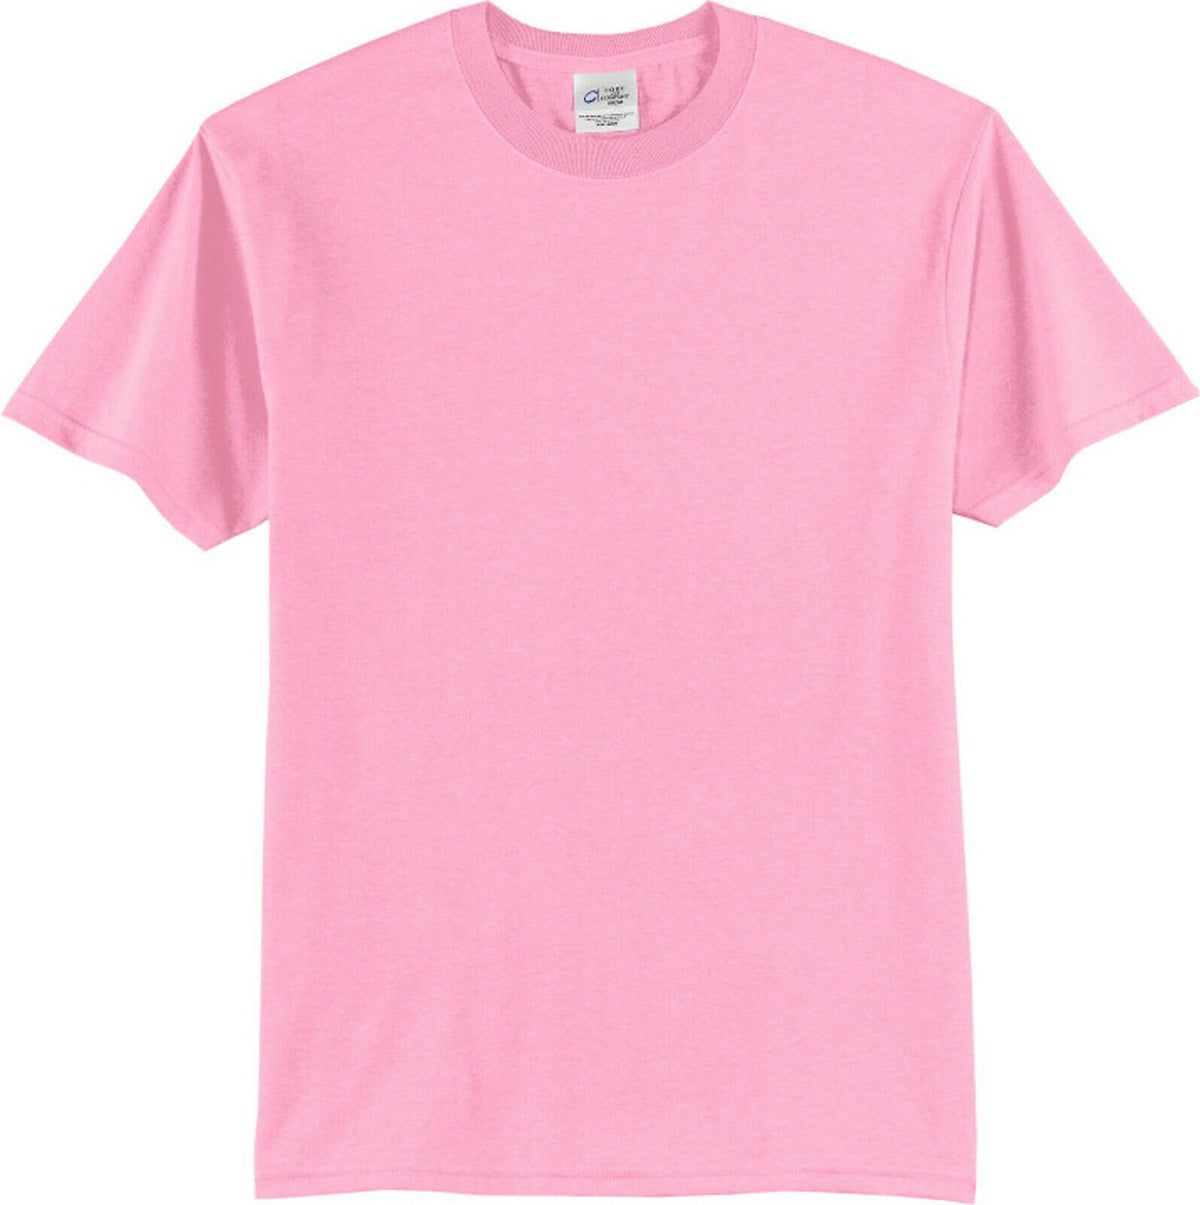 Pink Tshirt Mock Up